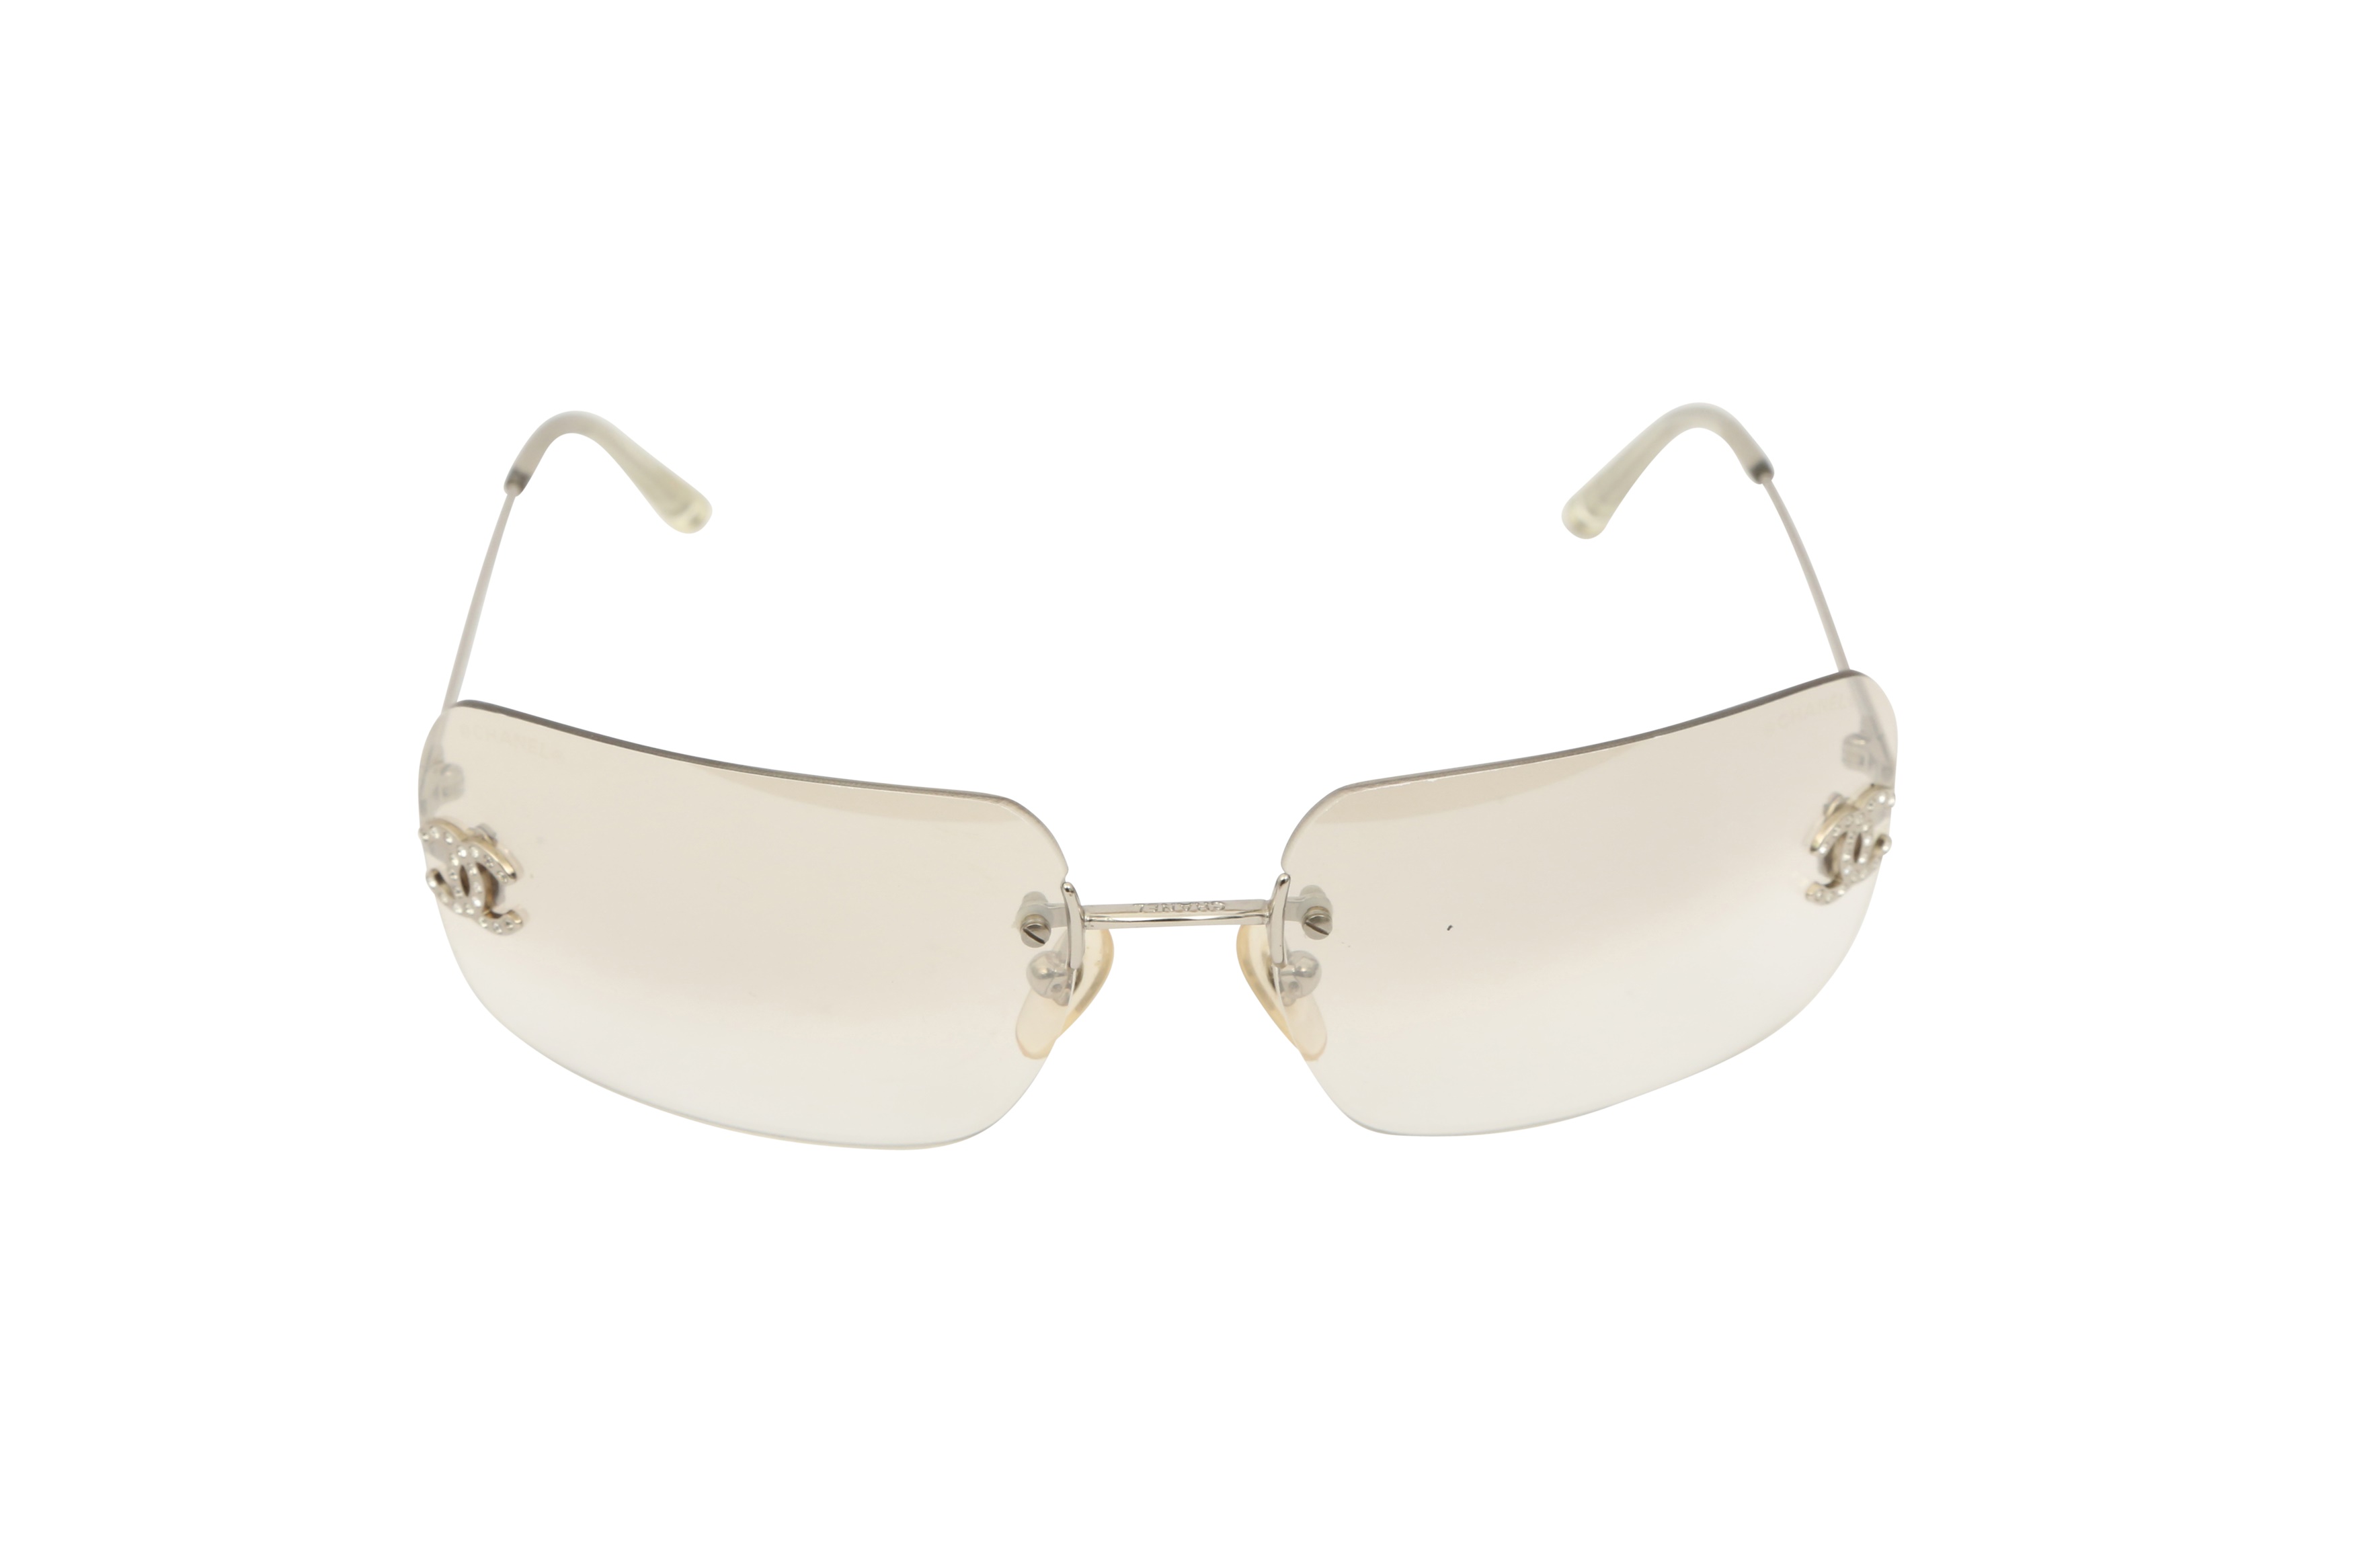 Chanel sunglasses 4017-d silver - Gem